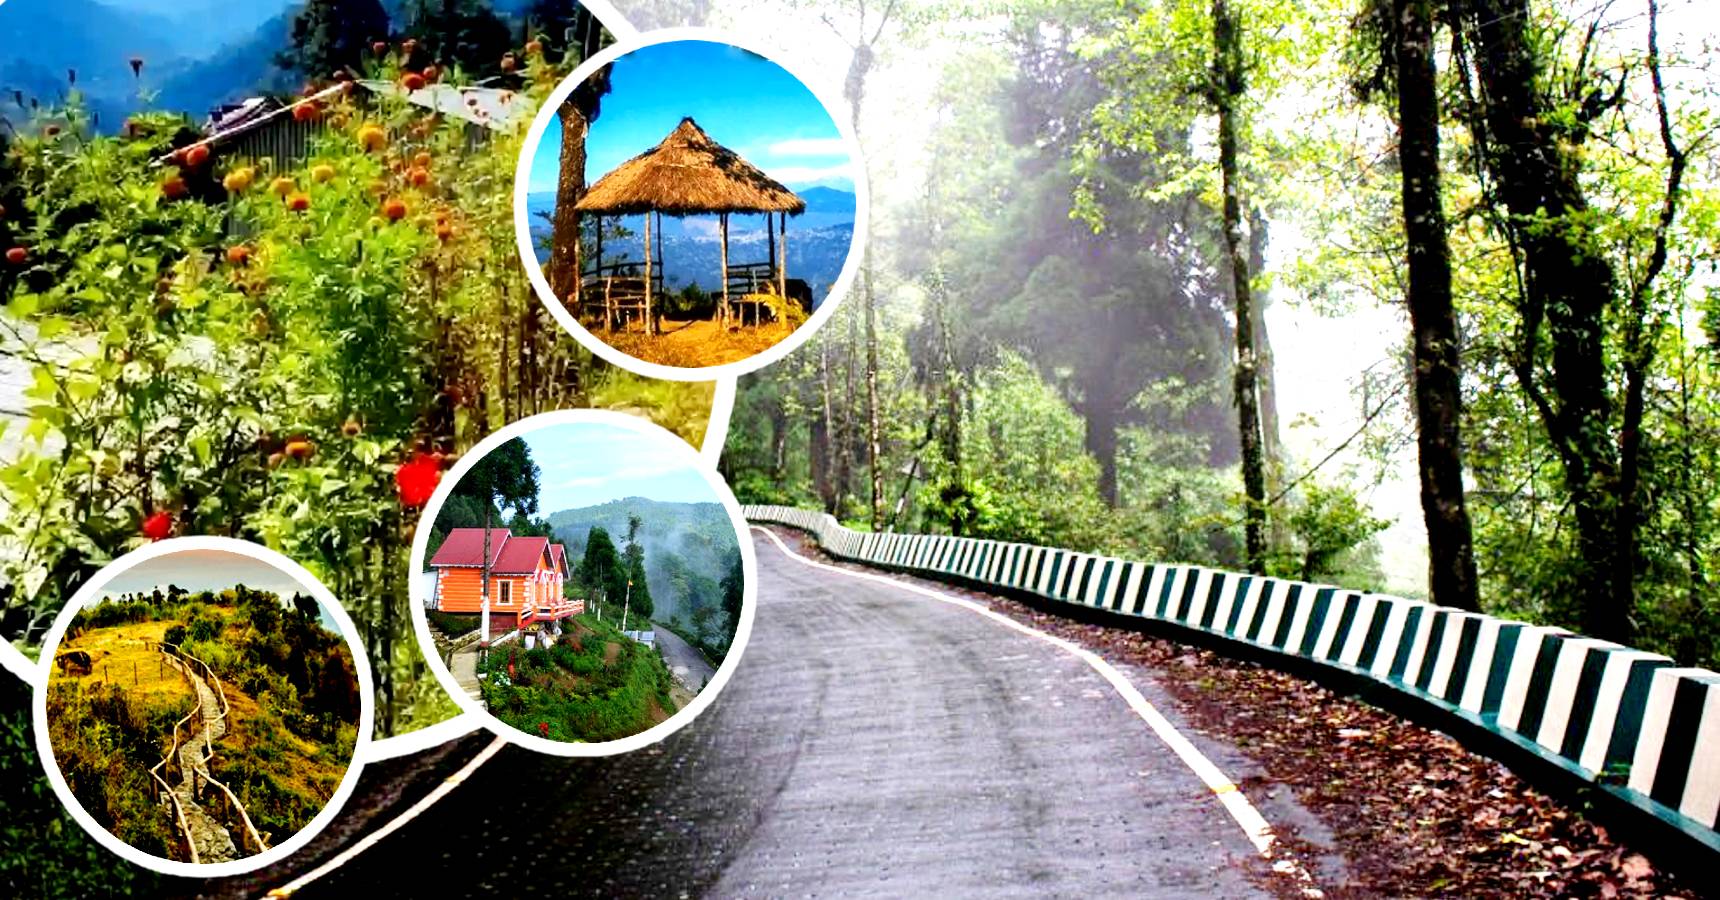 North Bengal Travel offbeat village Chataidhura near Darjeeling